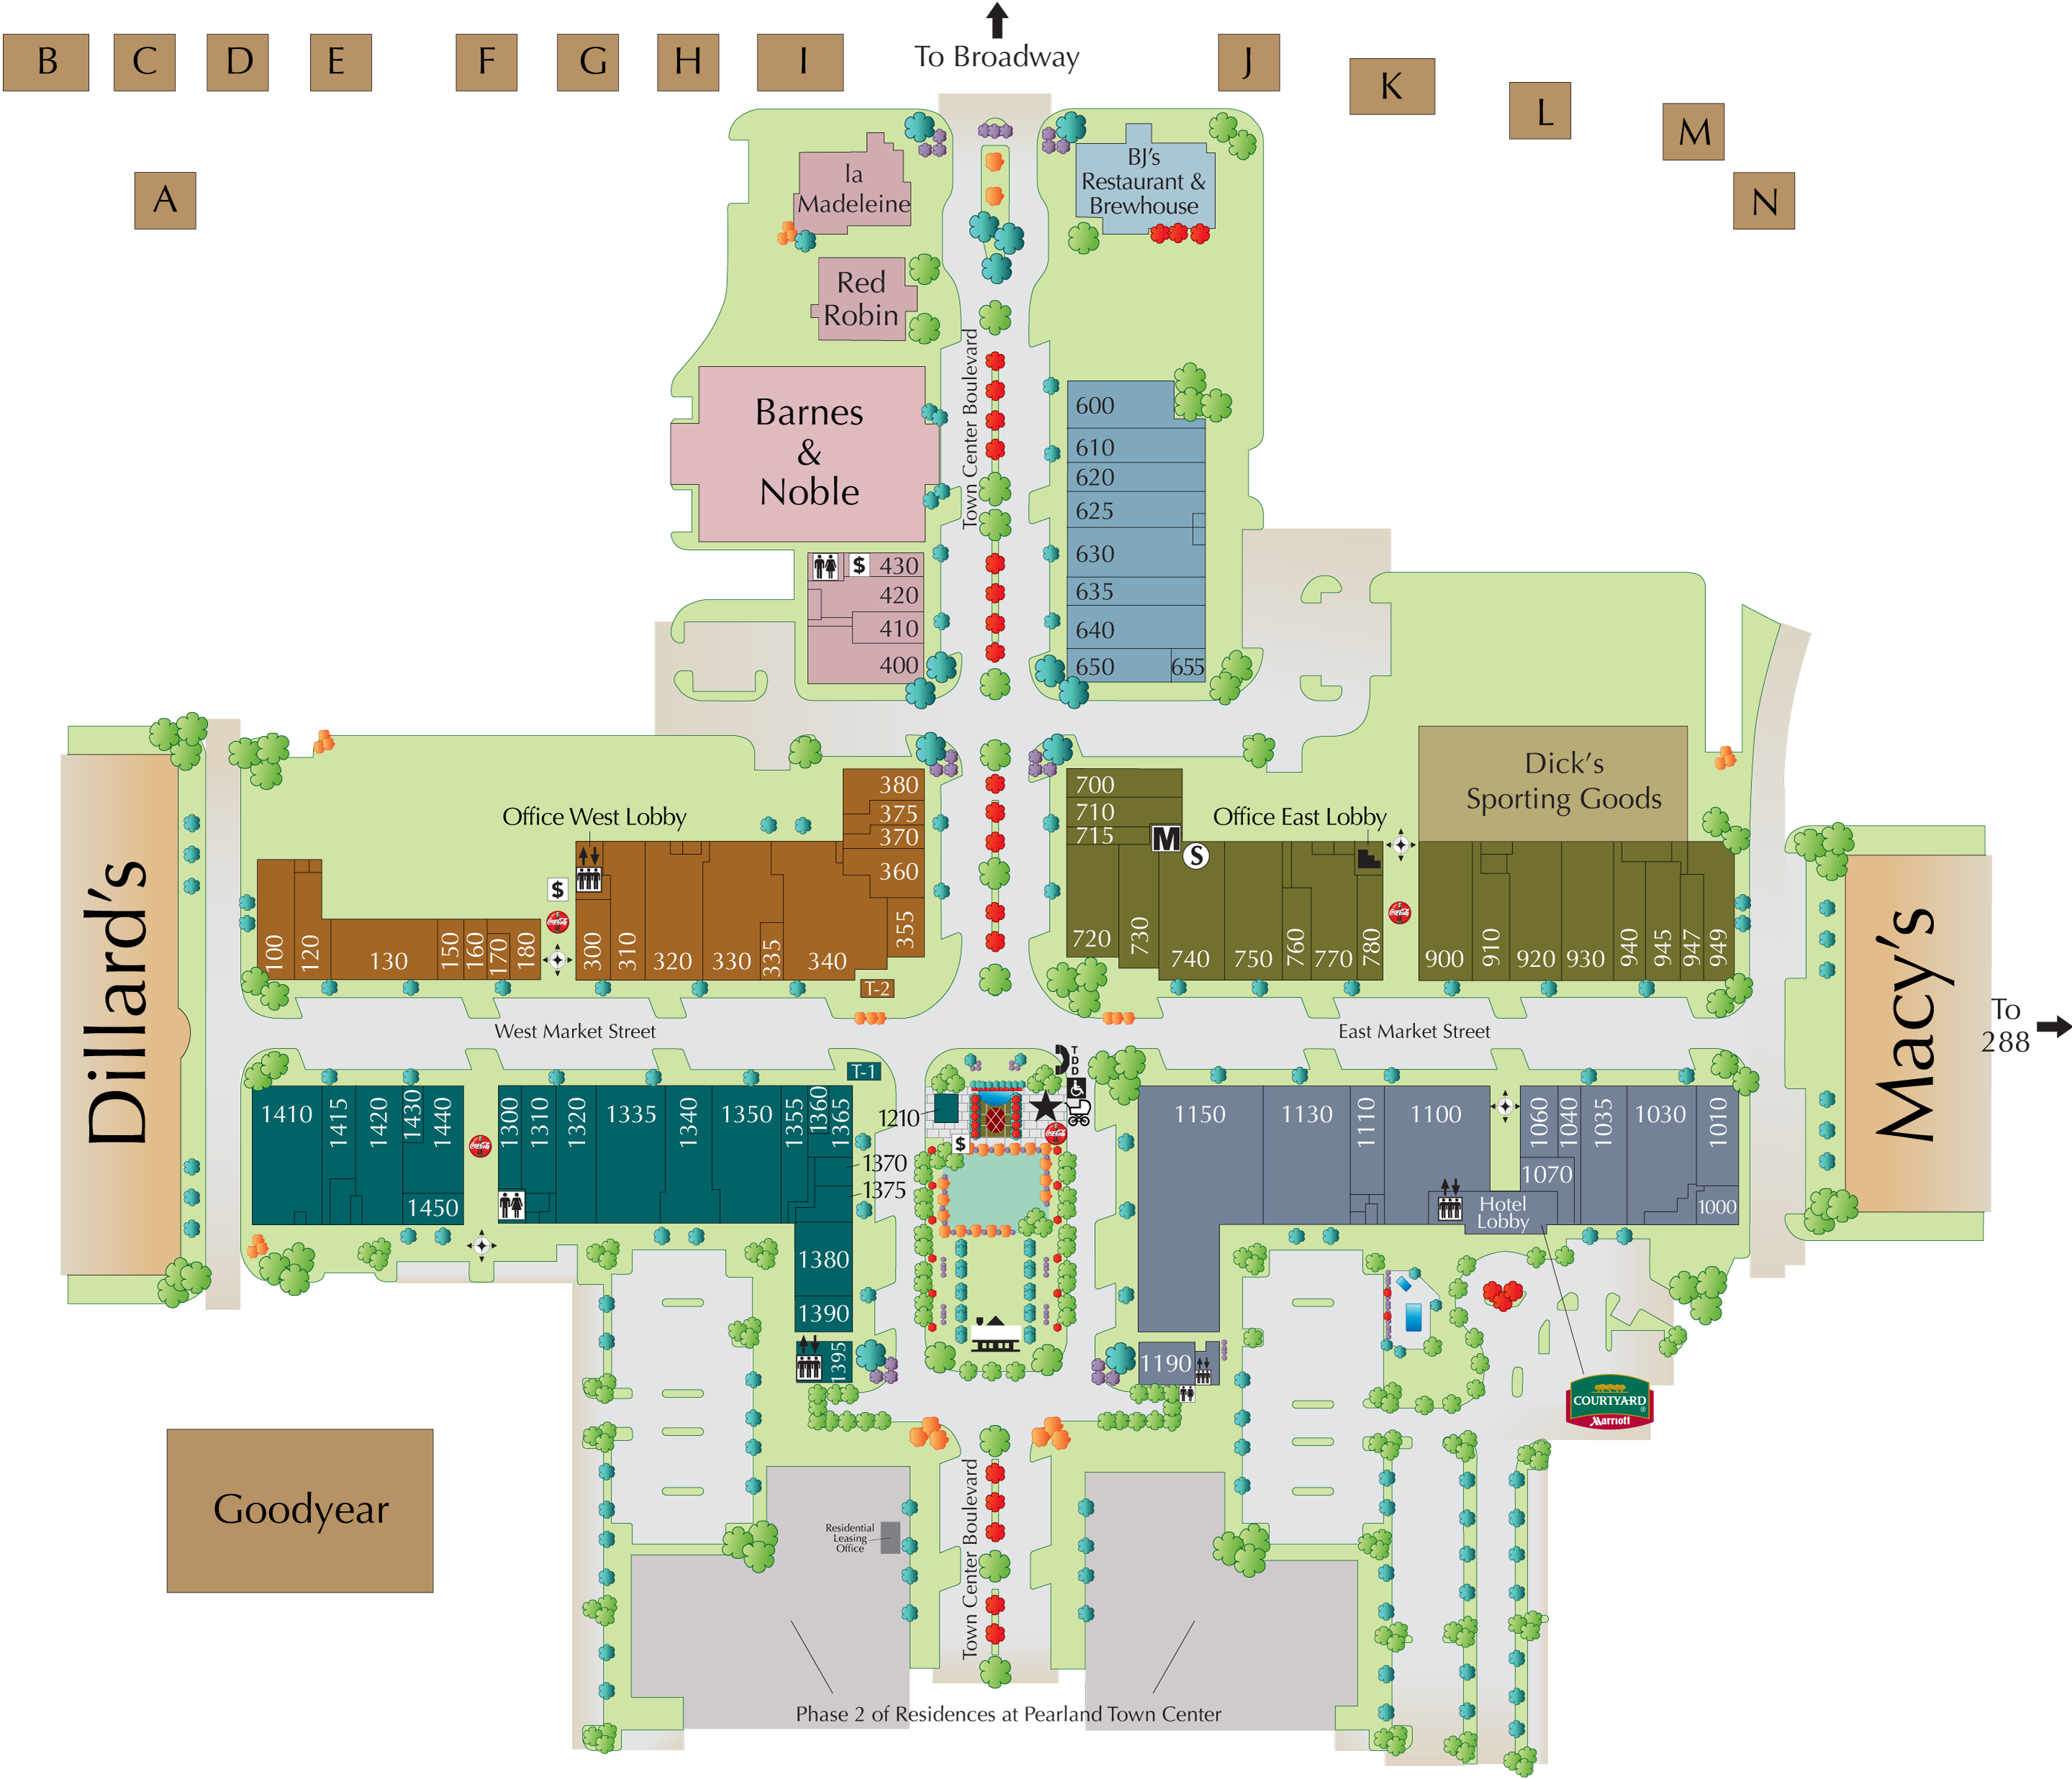 Galleria Mall Map